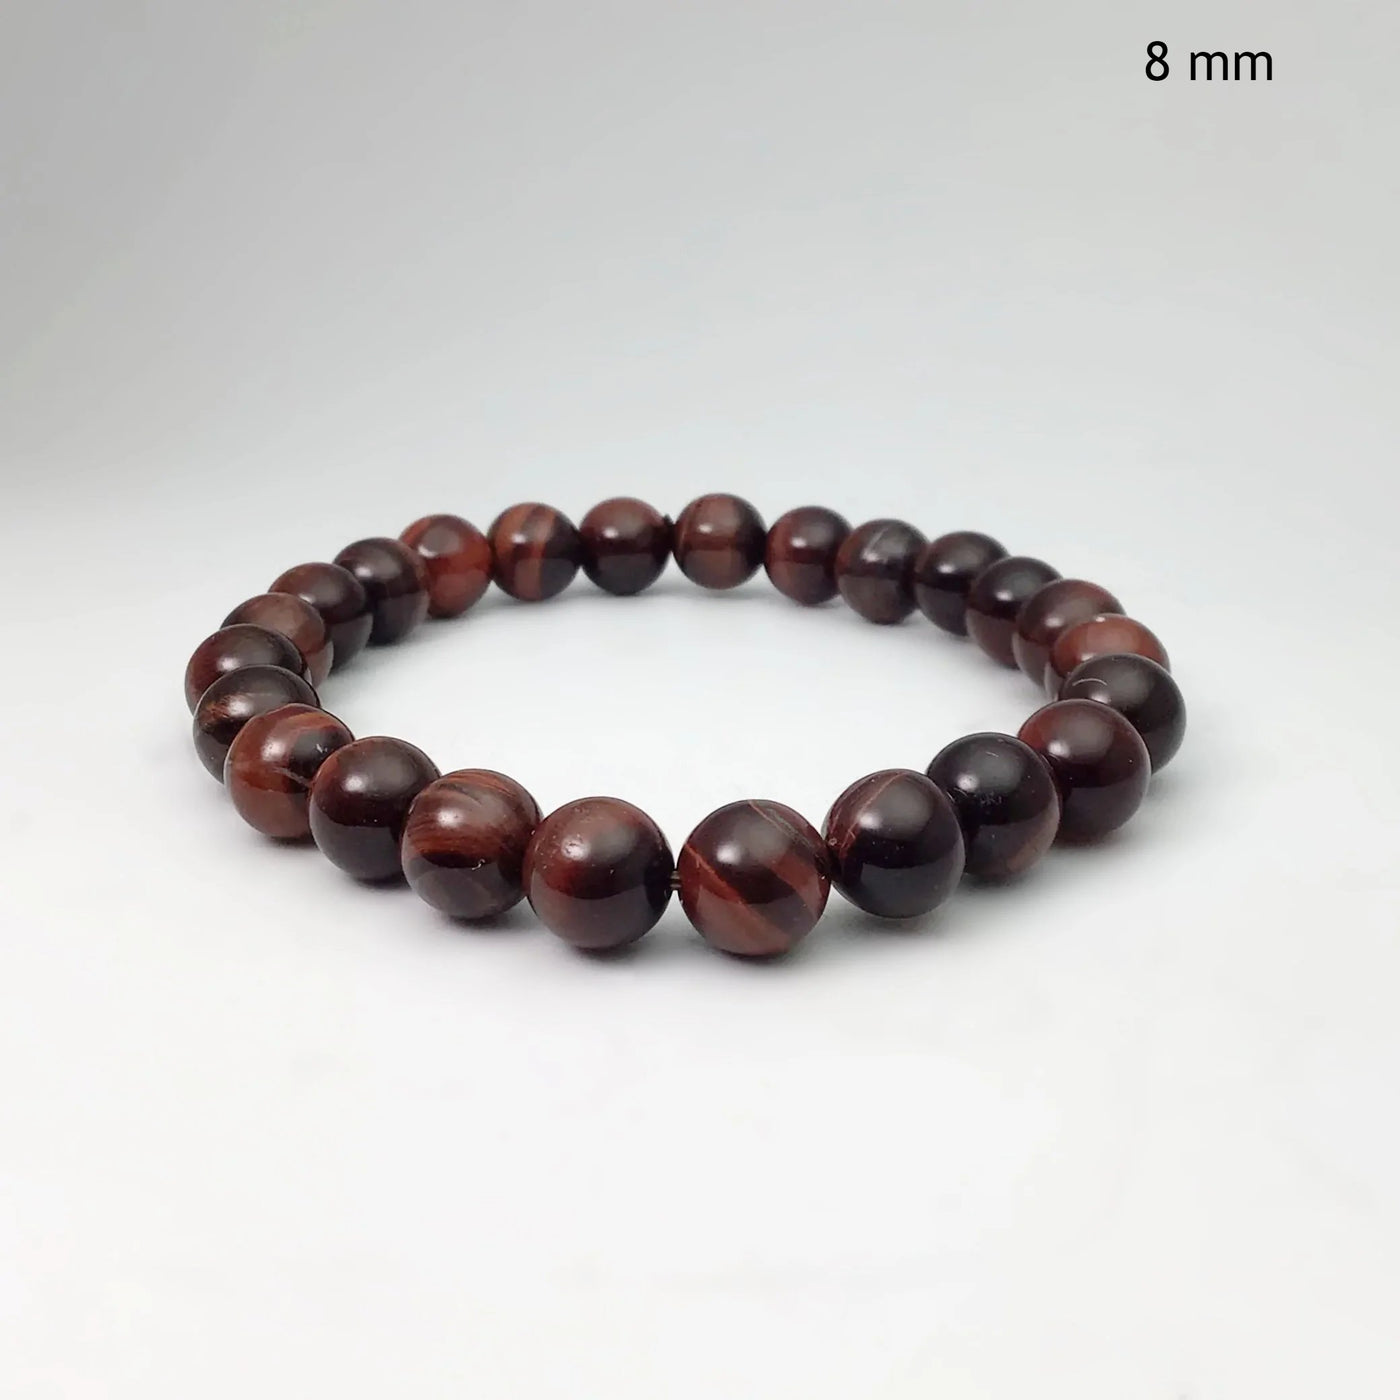 bead bracelet women - Buy bead bracelet women at Best Price in Malaysia |  h5.lazada.com.my